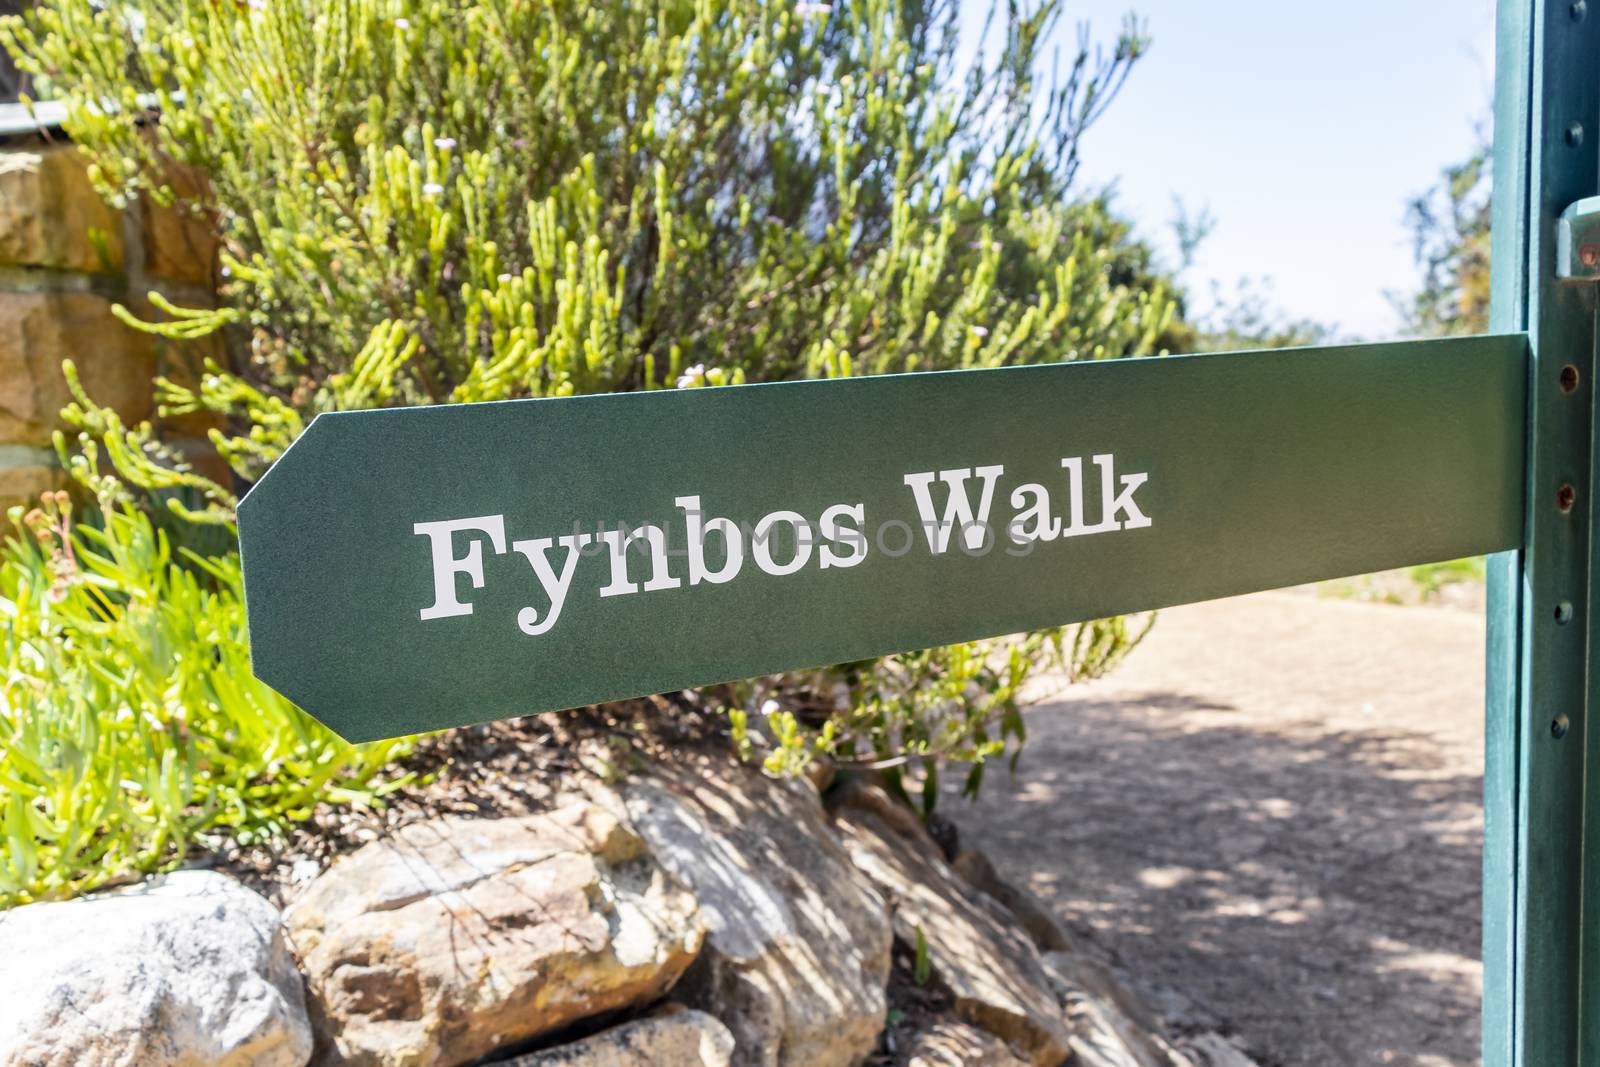 Fynbos Walk green turquoise sign in Kirstenbosch, Cape Town. by Arkadij